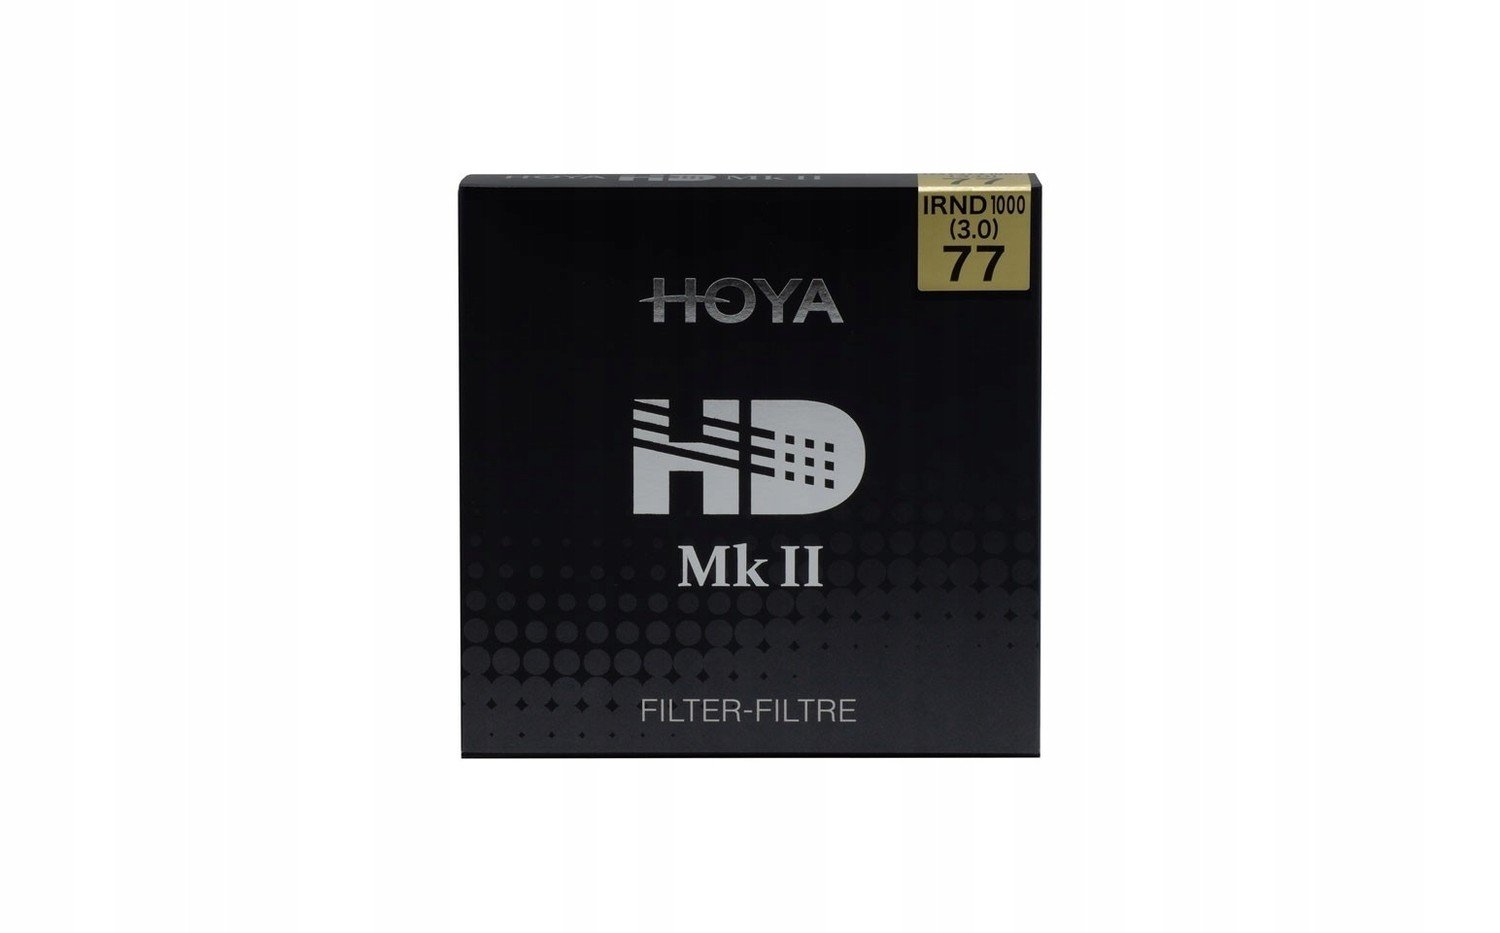 Filtr Hoya Hd MkII IRND1000 (3.0) 55mm